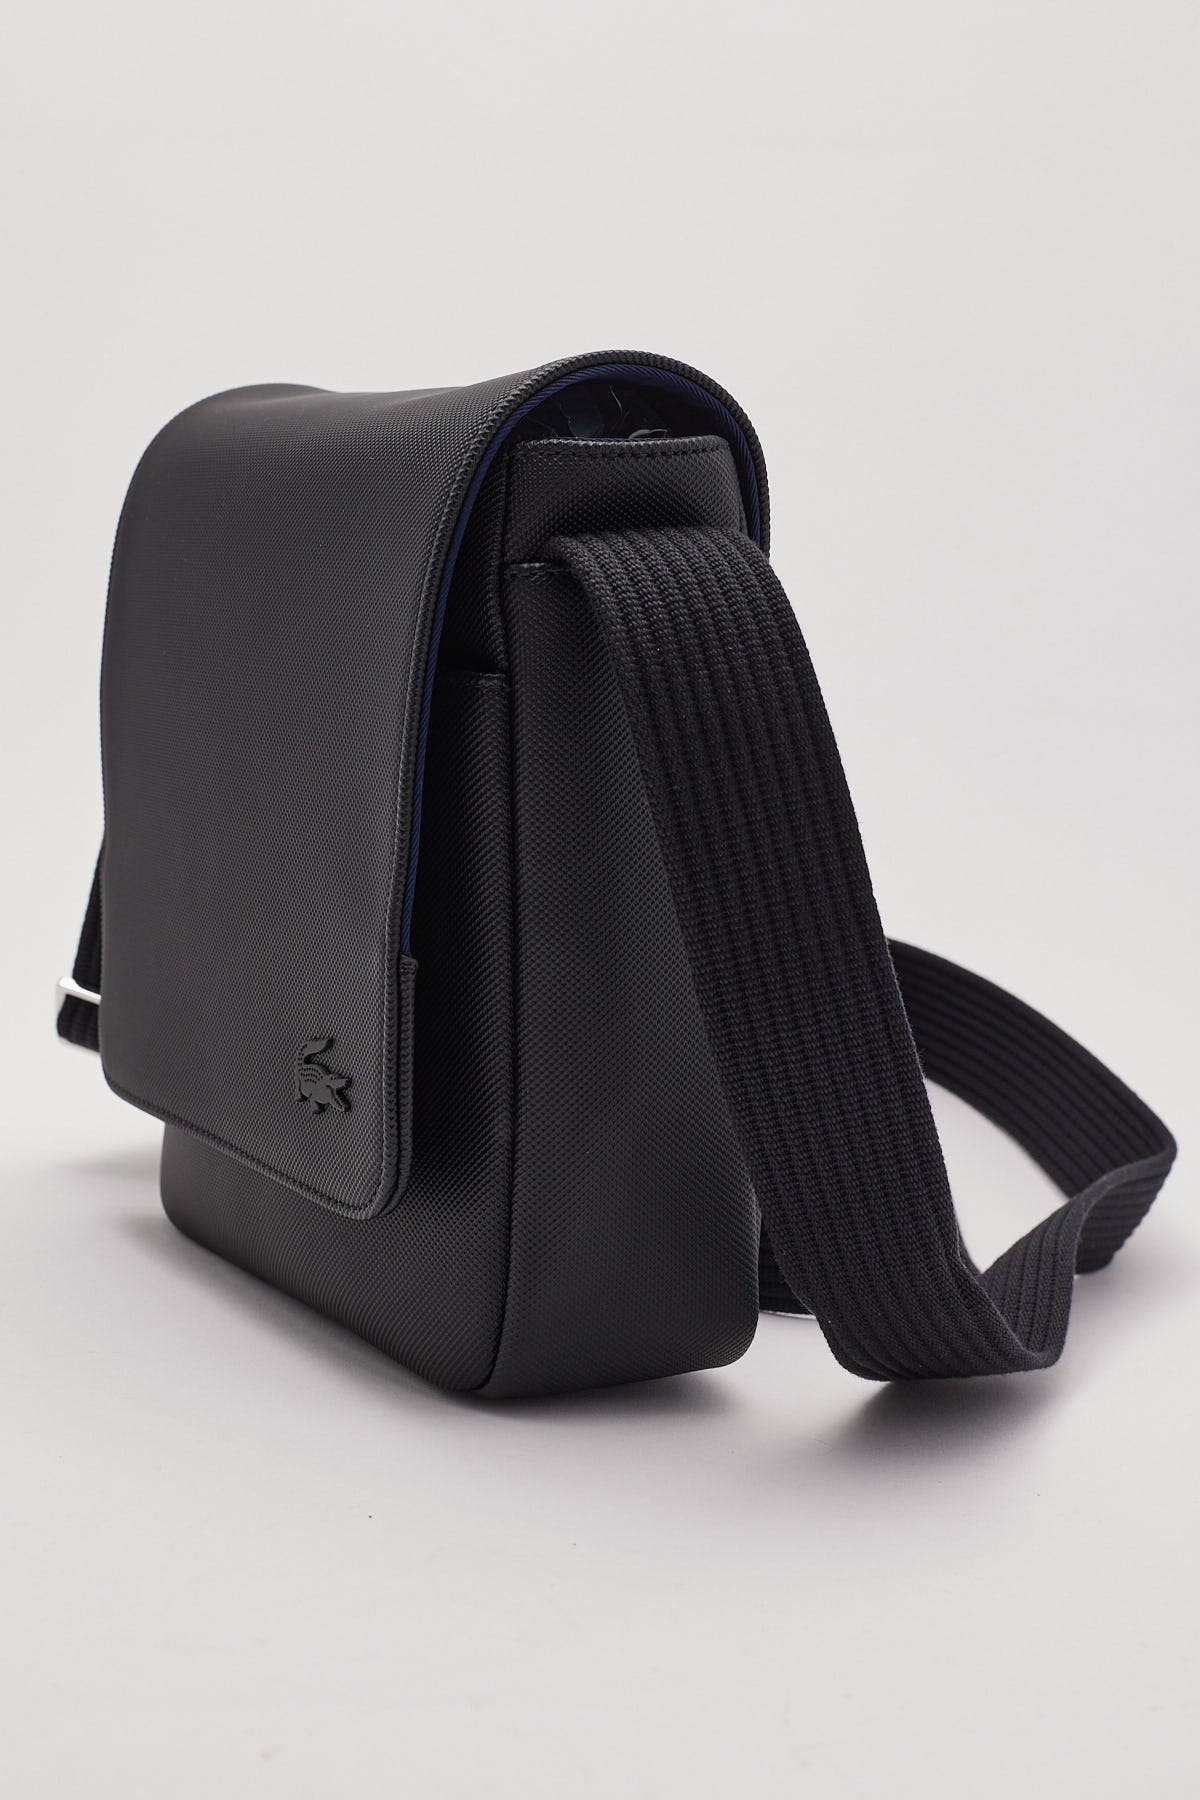 Lacoste Men's Classic Crossover Bag Black